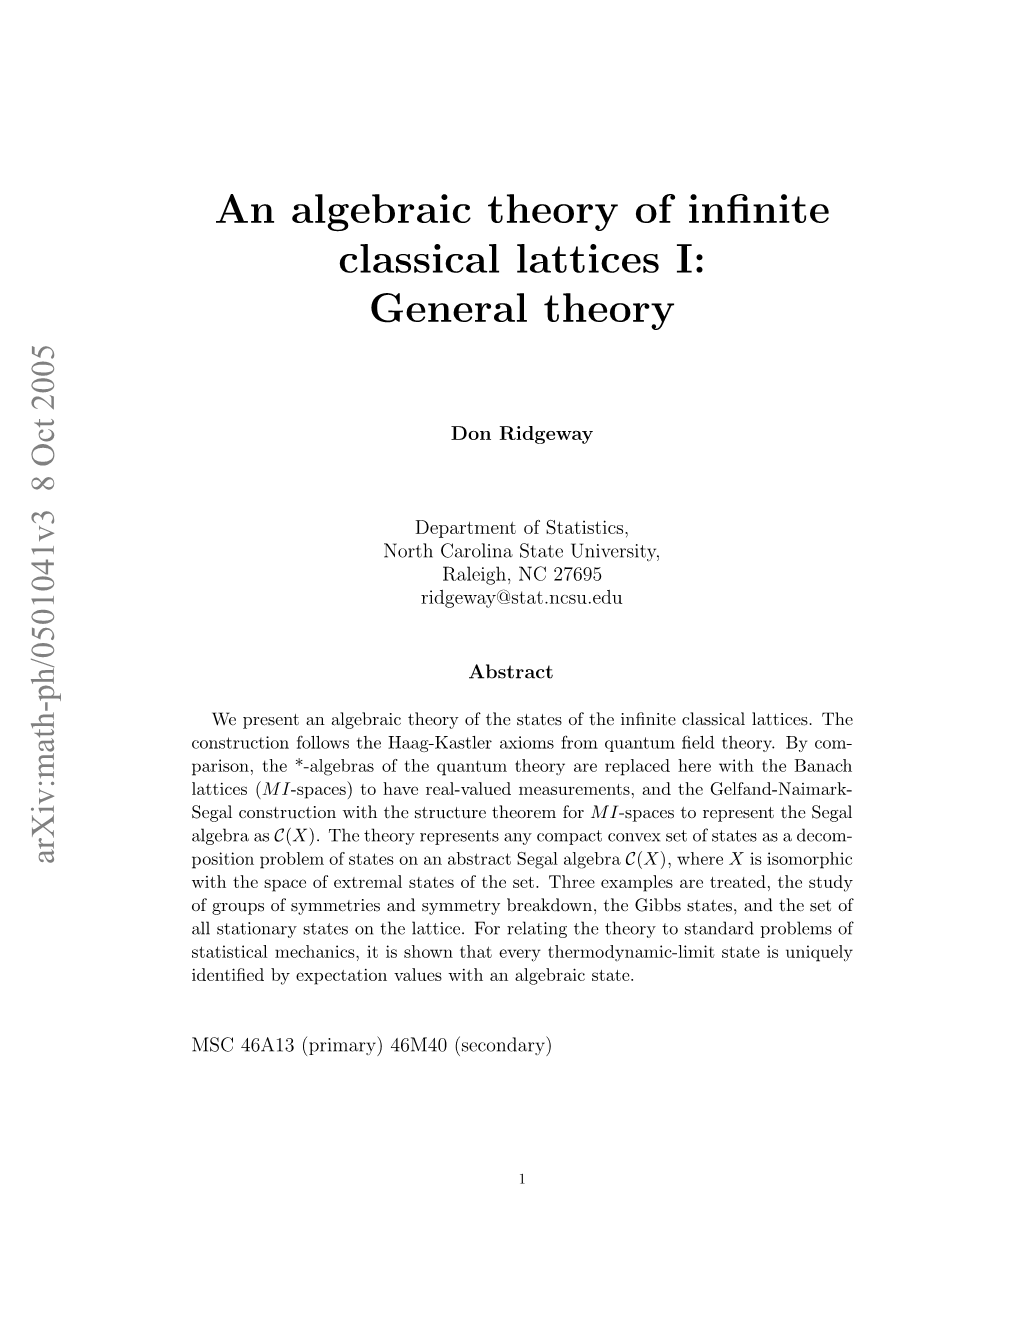 An Algebraic Theory of Infinite Classical Lattices I